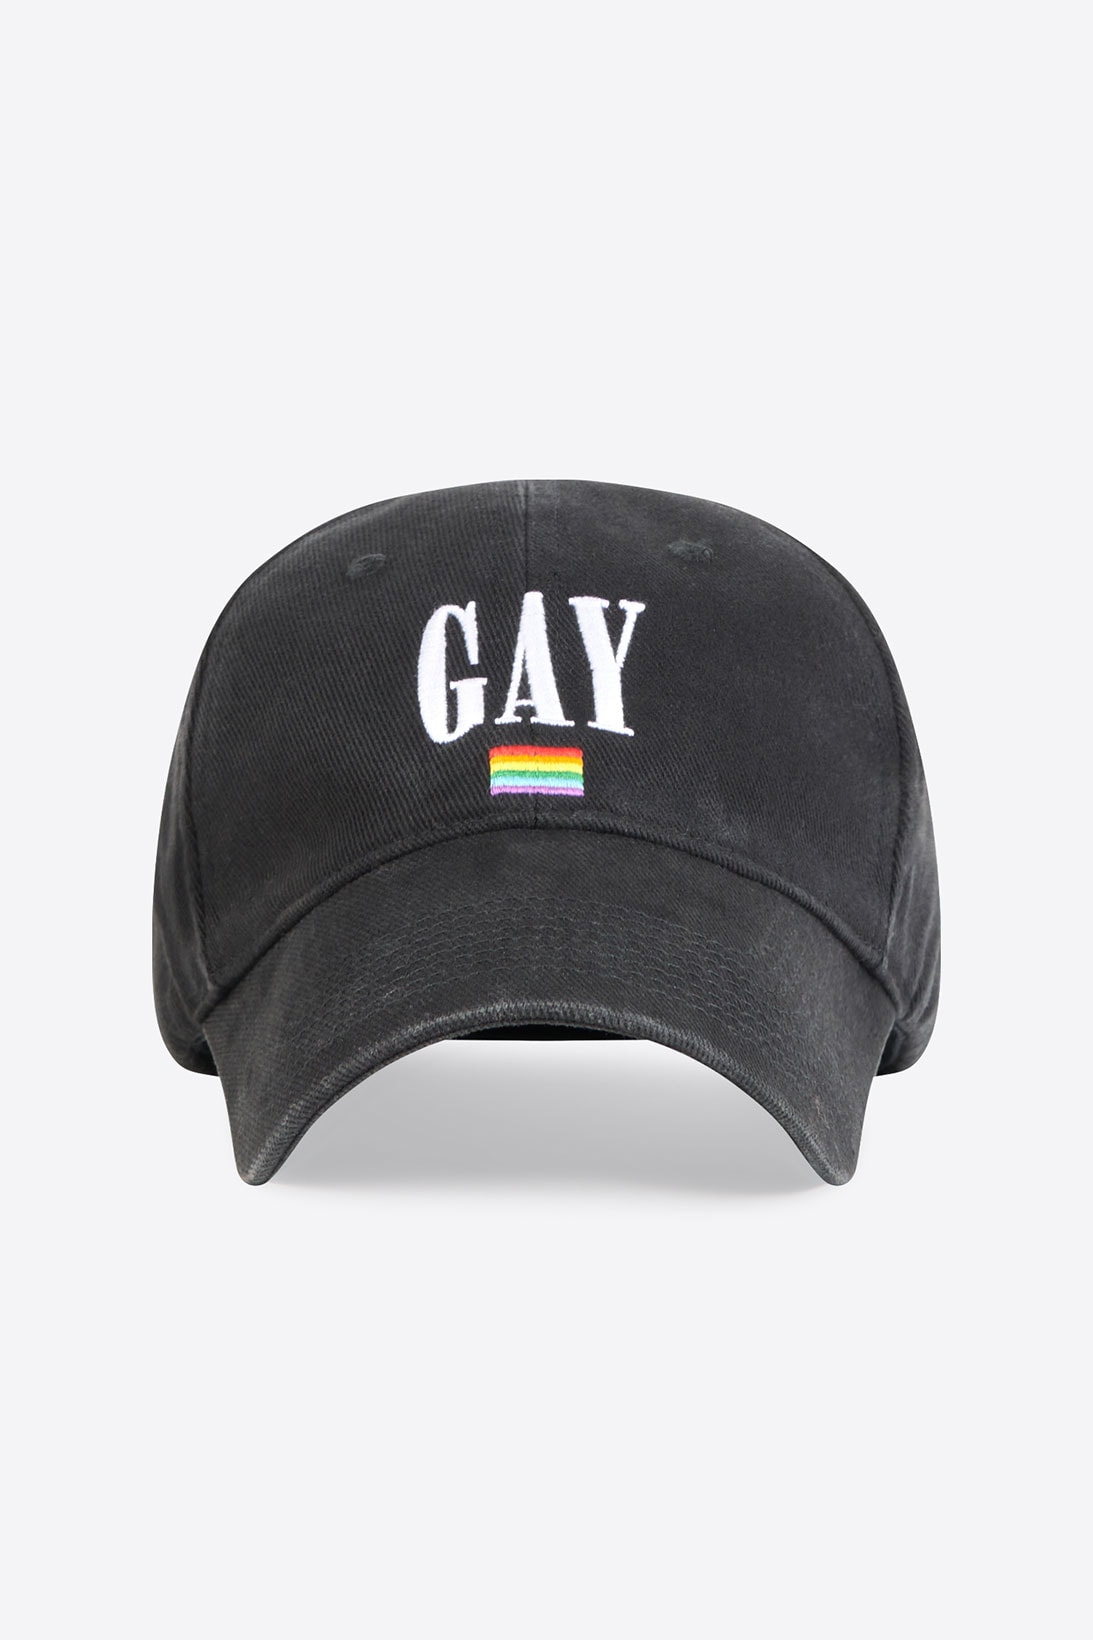 balenciaga pre-fall 2021 collection pride month capsule cap hat